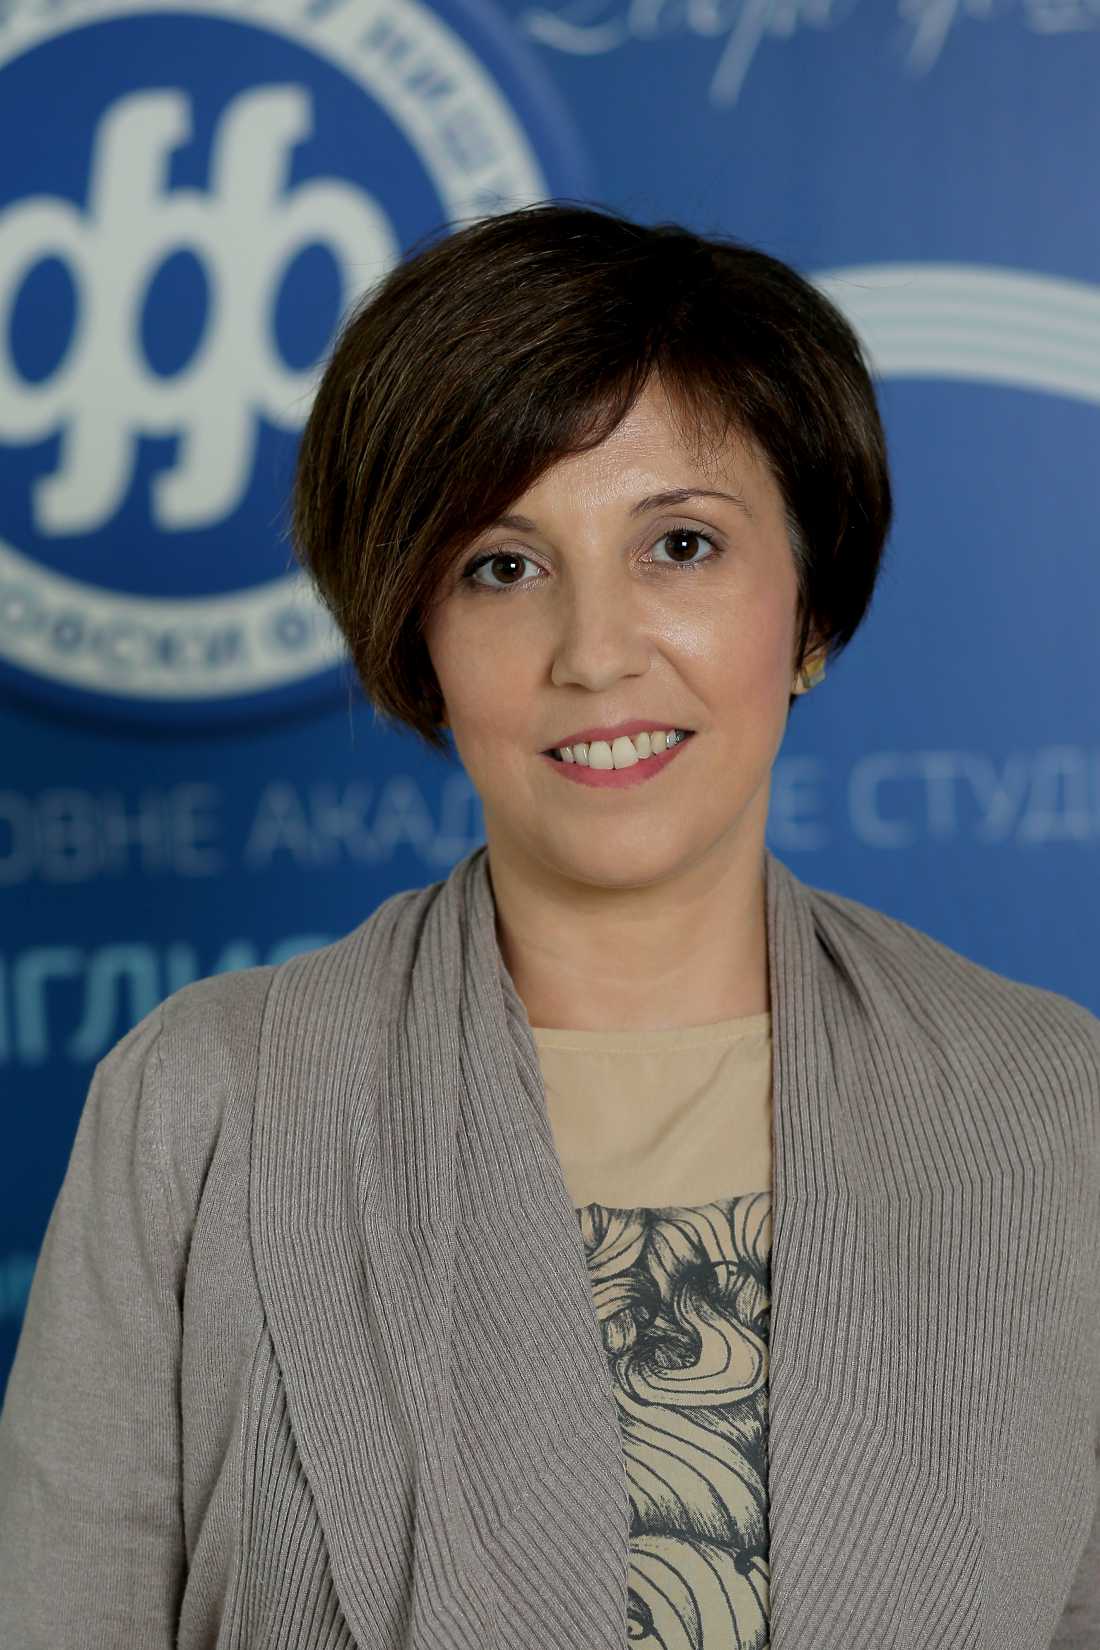 Милица Митровић, Департман за психологију, Филозофски факултет